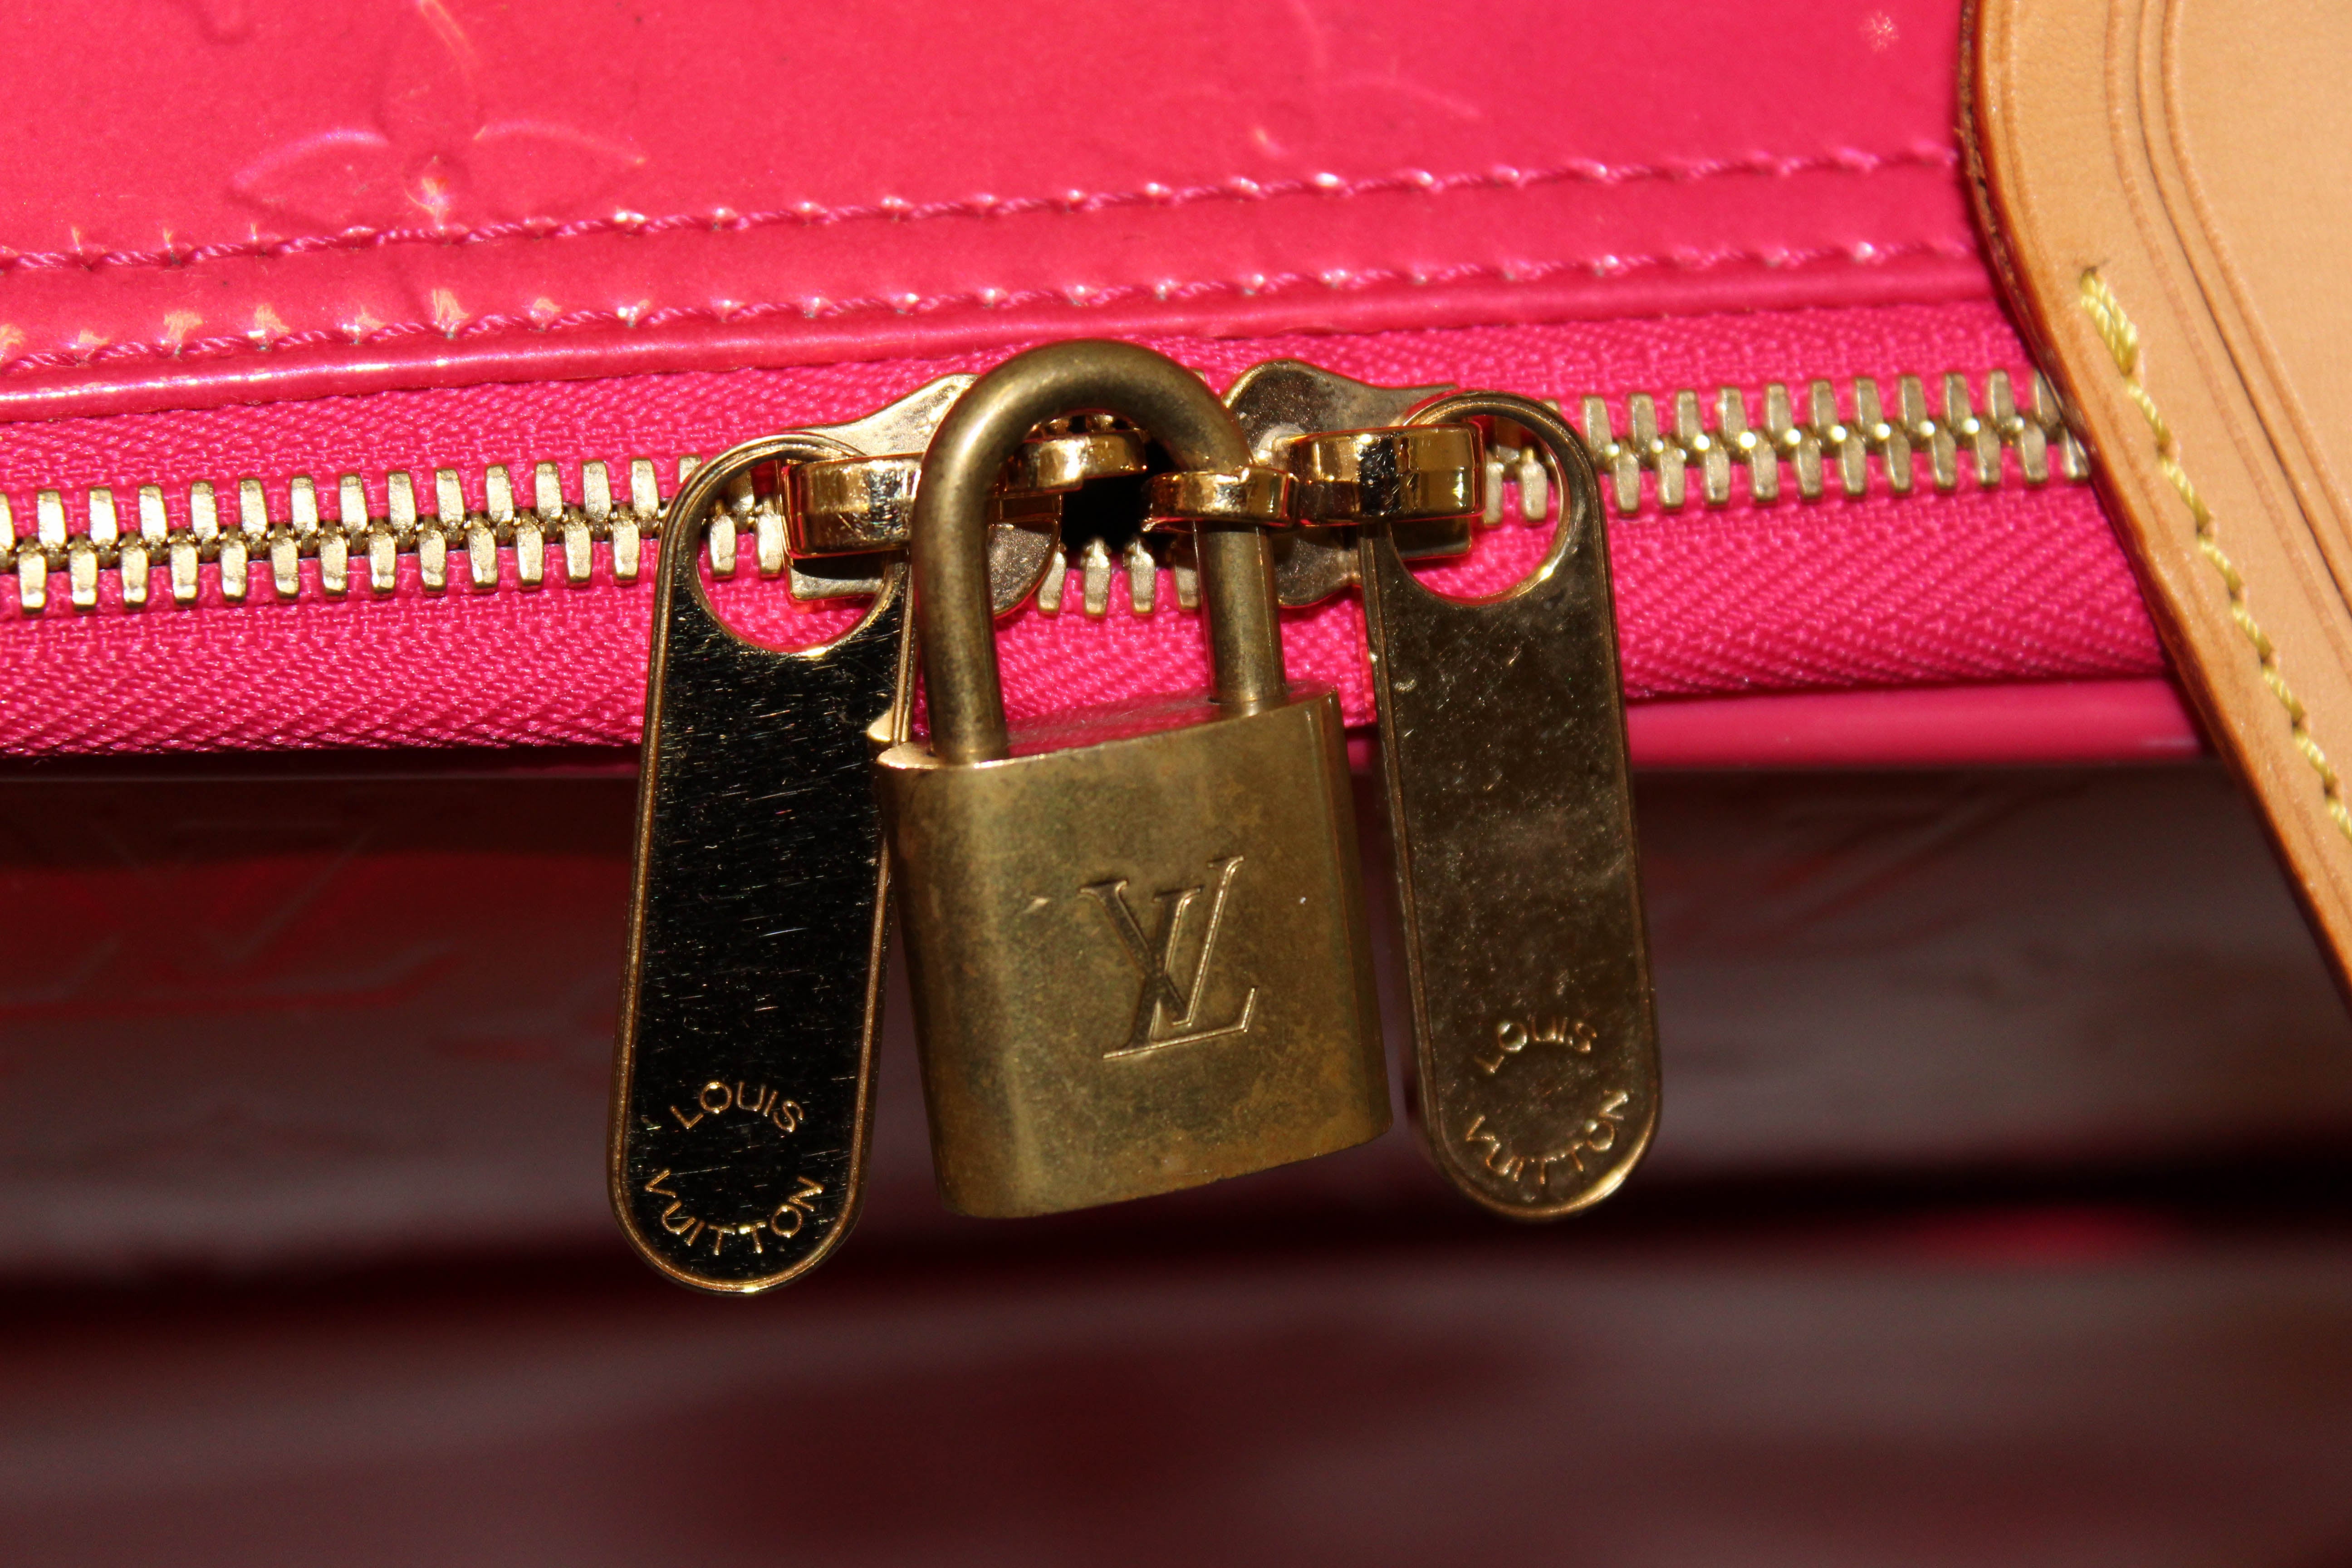 LOUIS VUITTON Pegase 45 Monogram Vernis Leather Suitcase Travel Bag Pink